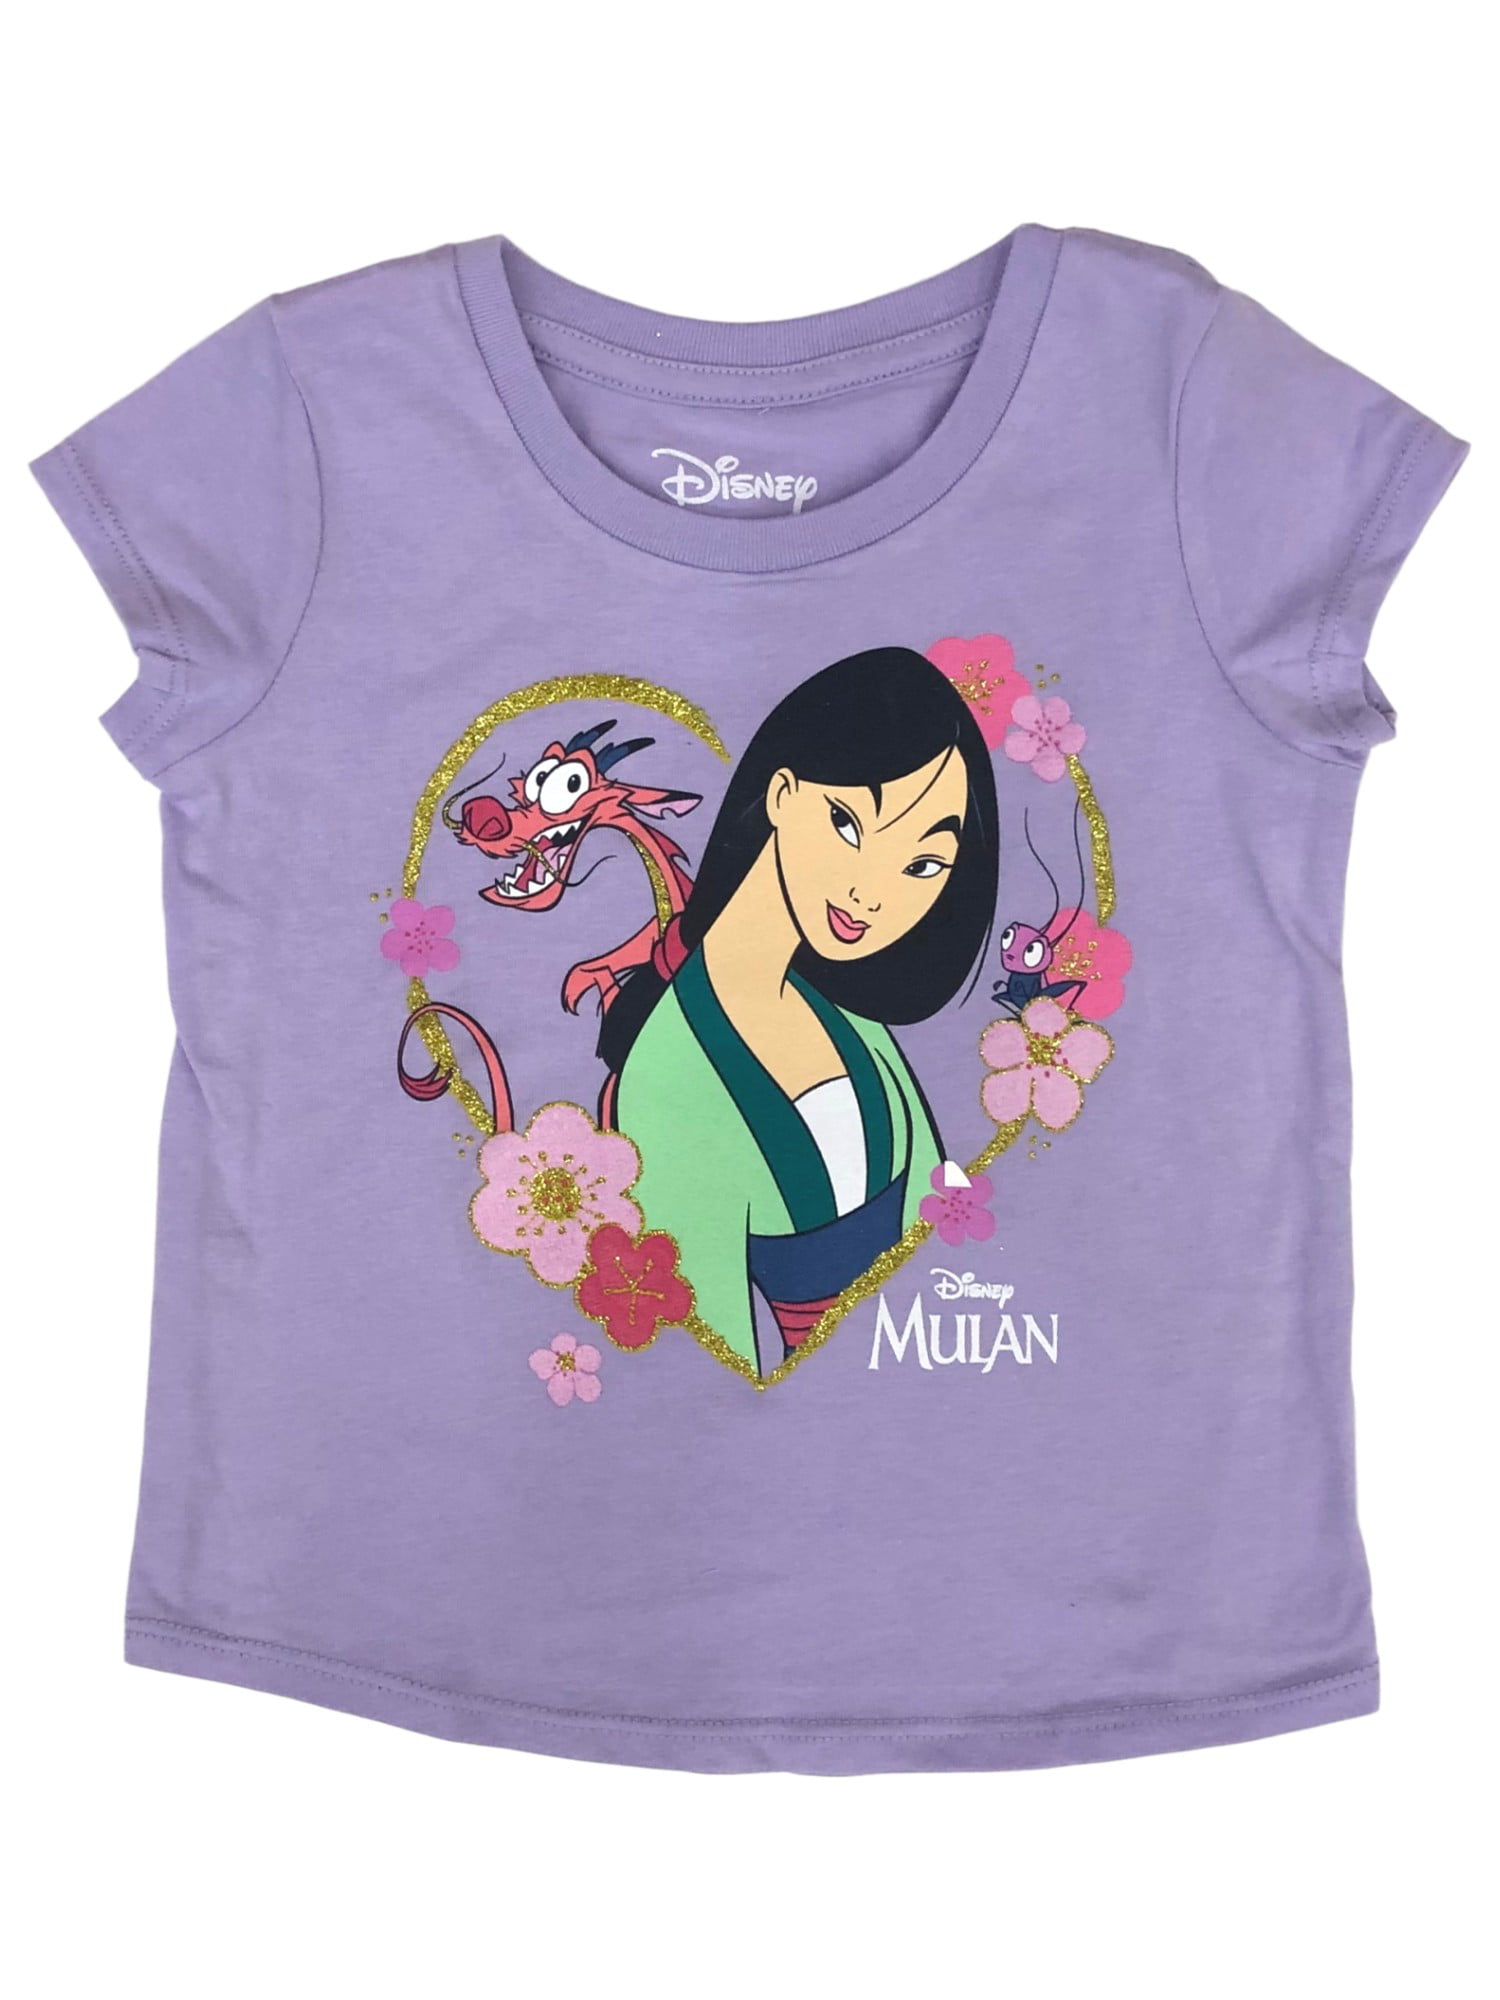 Shirt Toddler Beans Disney 2T Tee T-Shirt Mulan Sparkle Jumping Girls Purple